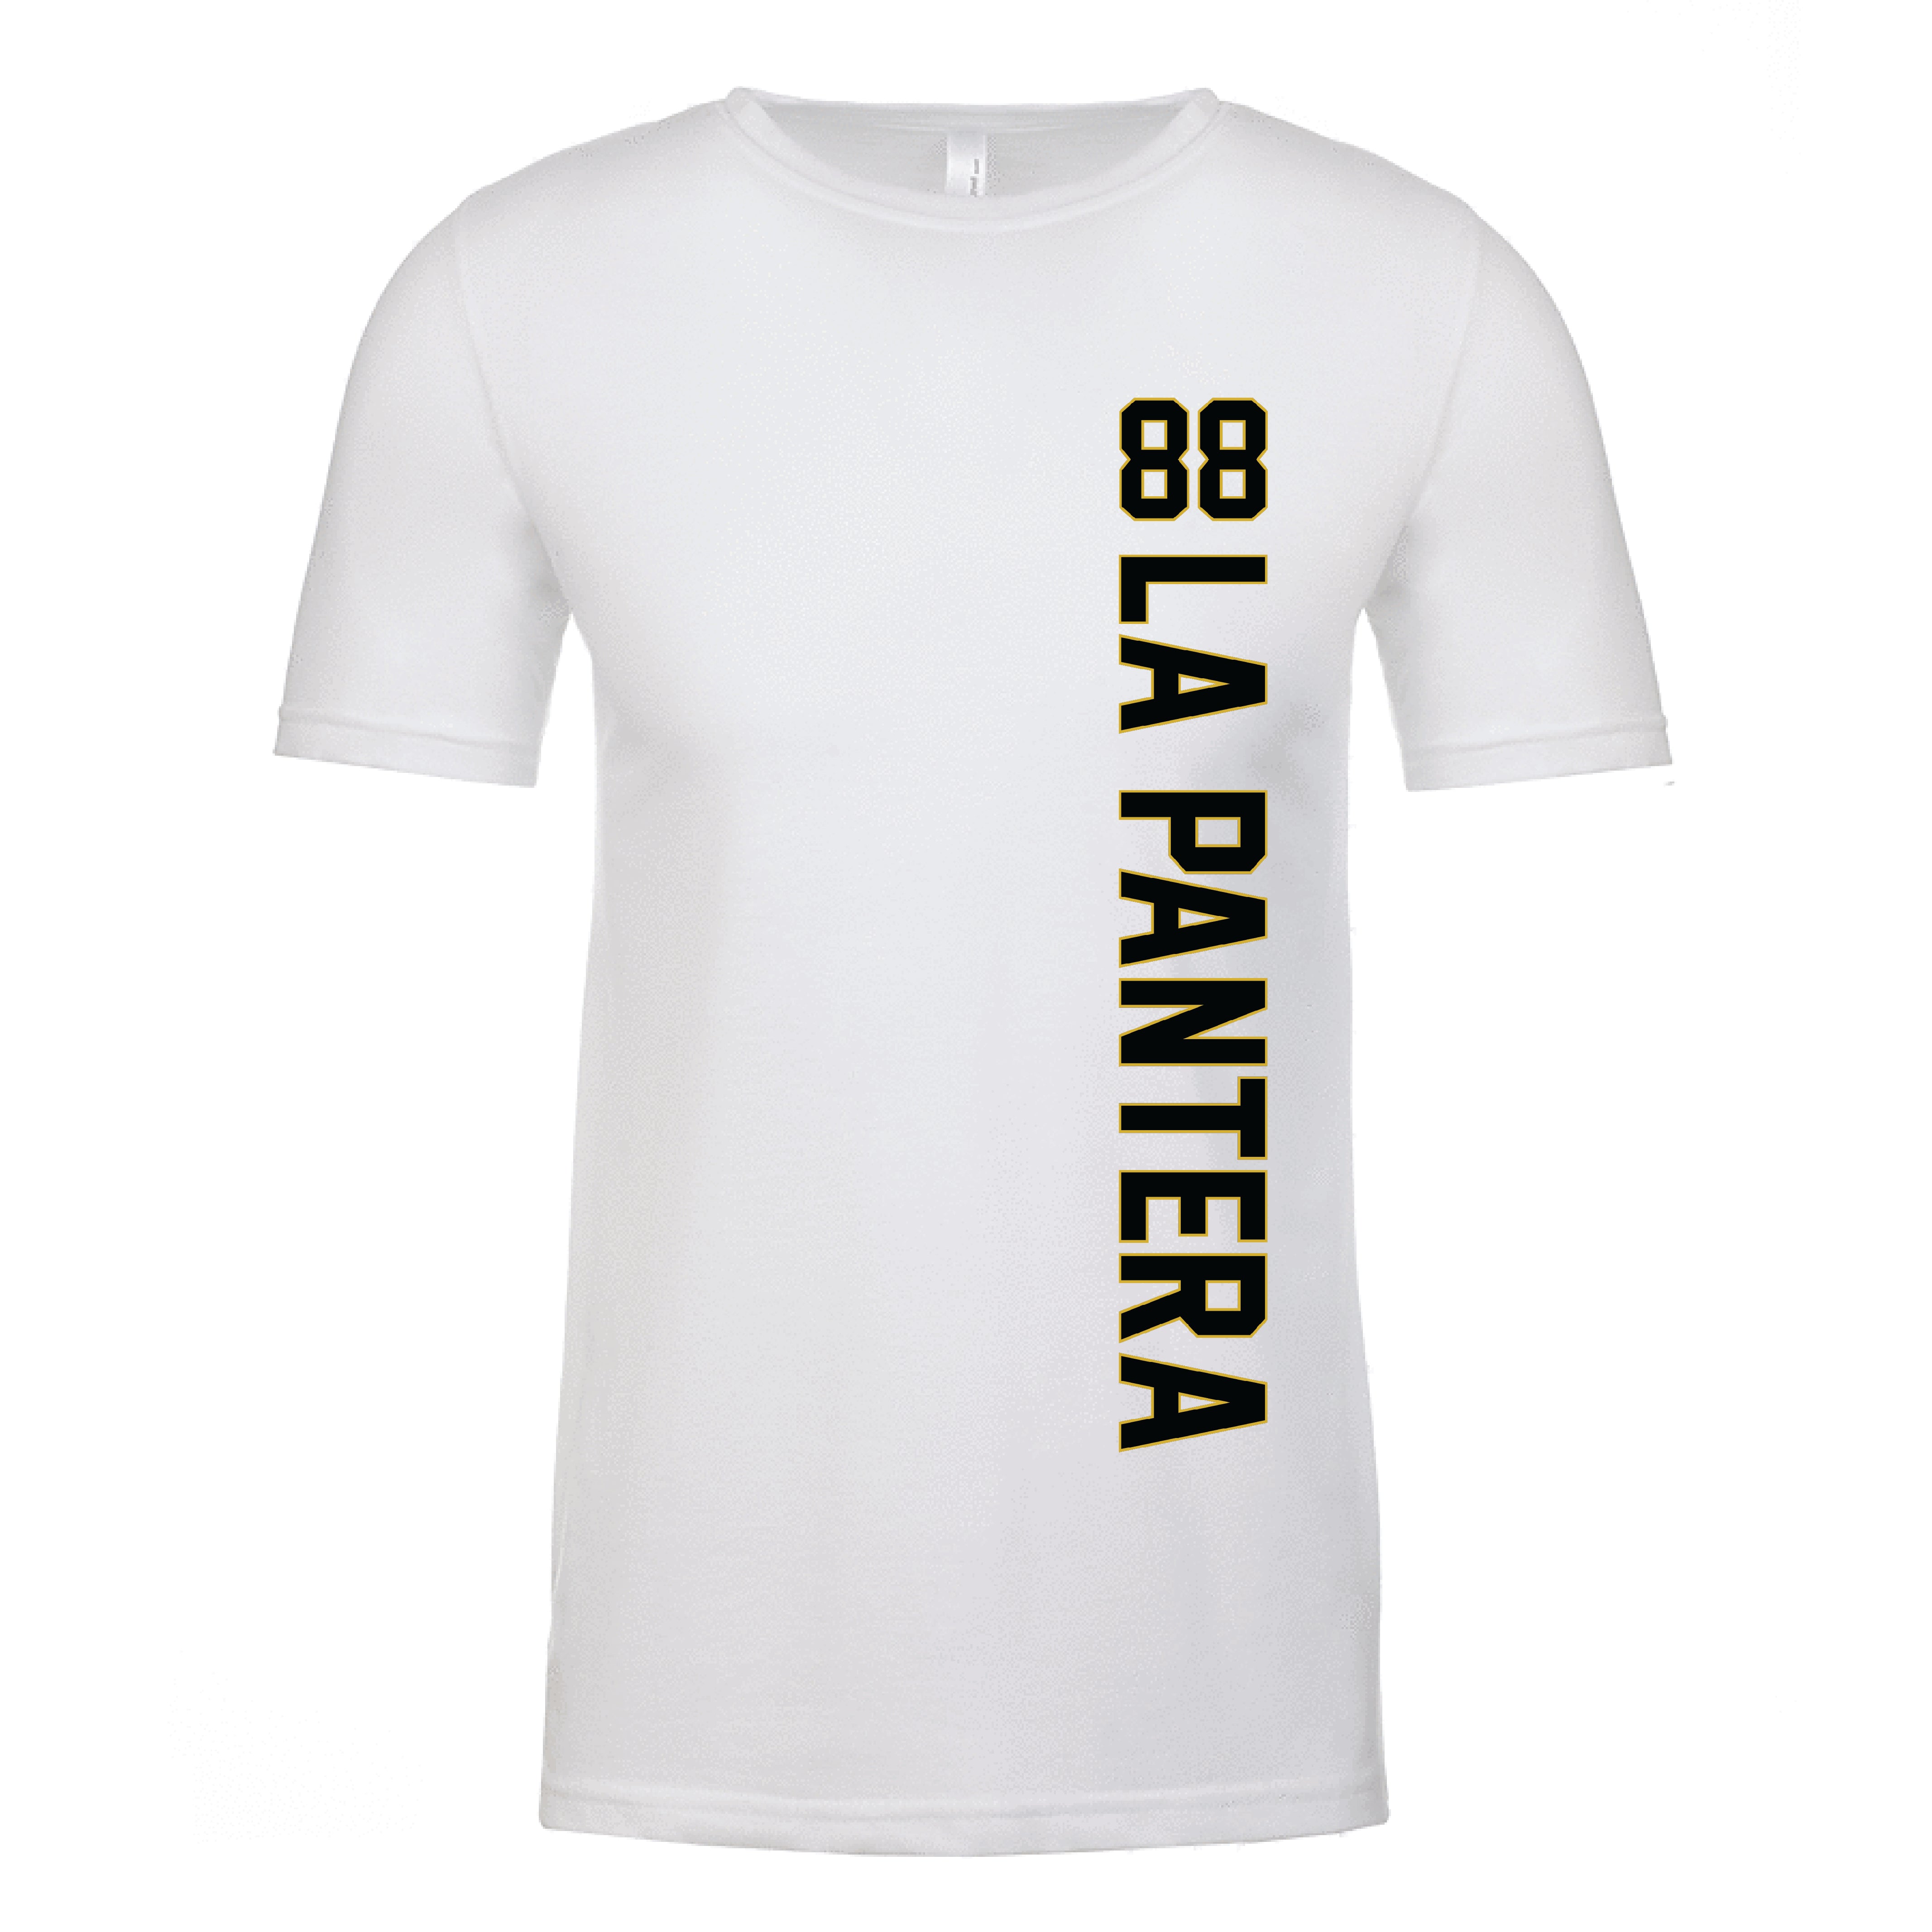 "88 LA PANTERA" Vertical Graphic Tee